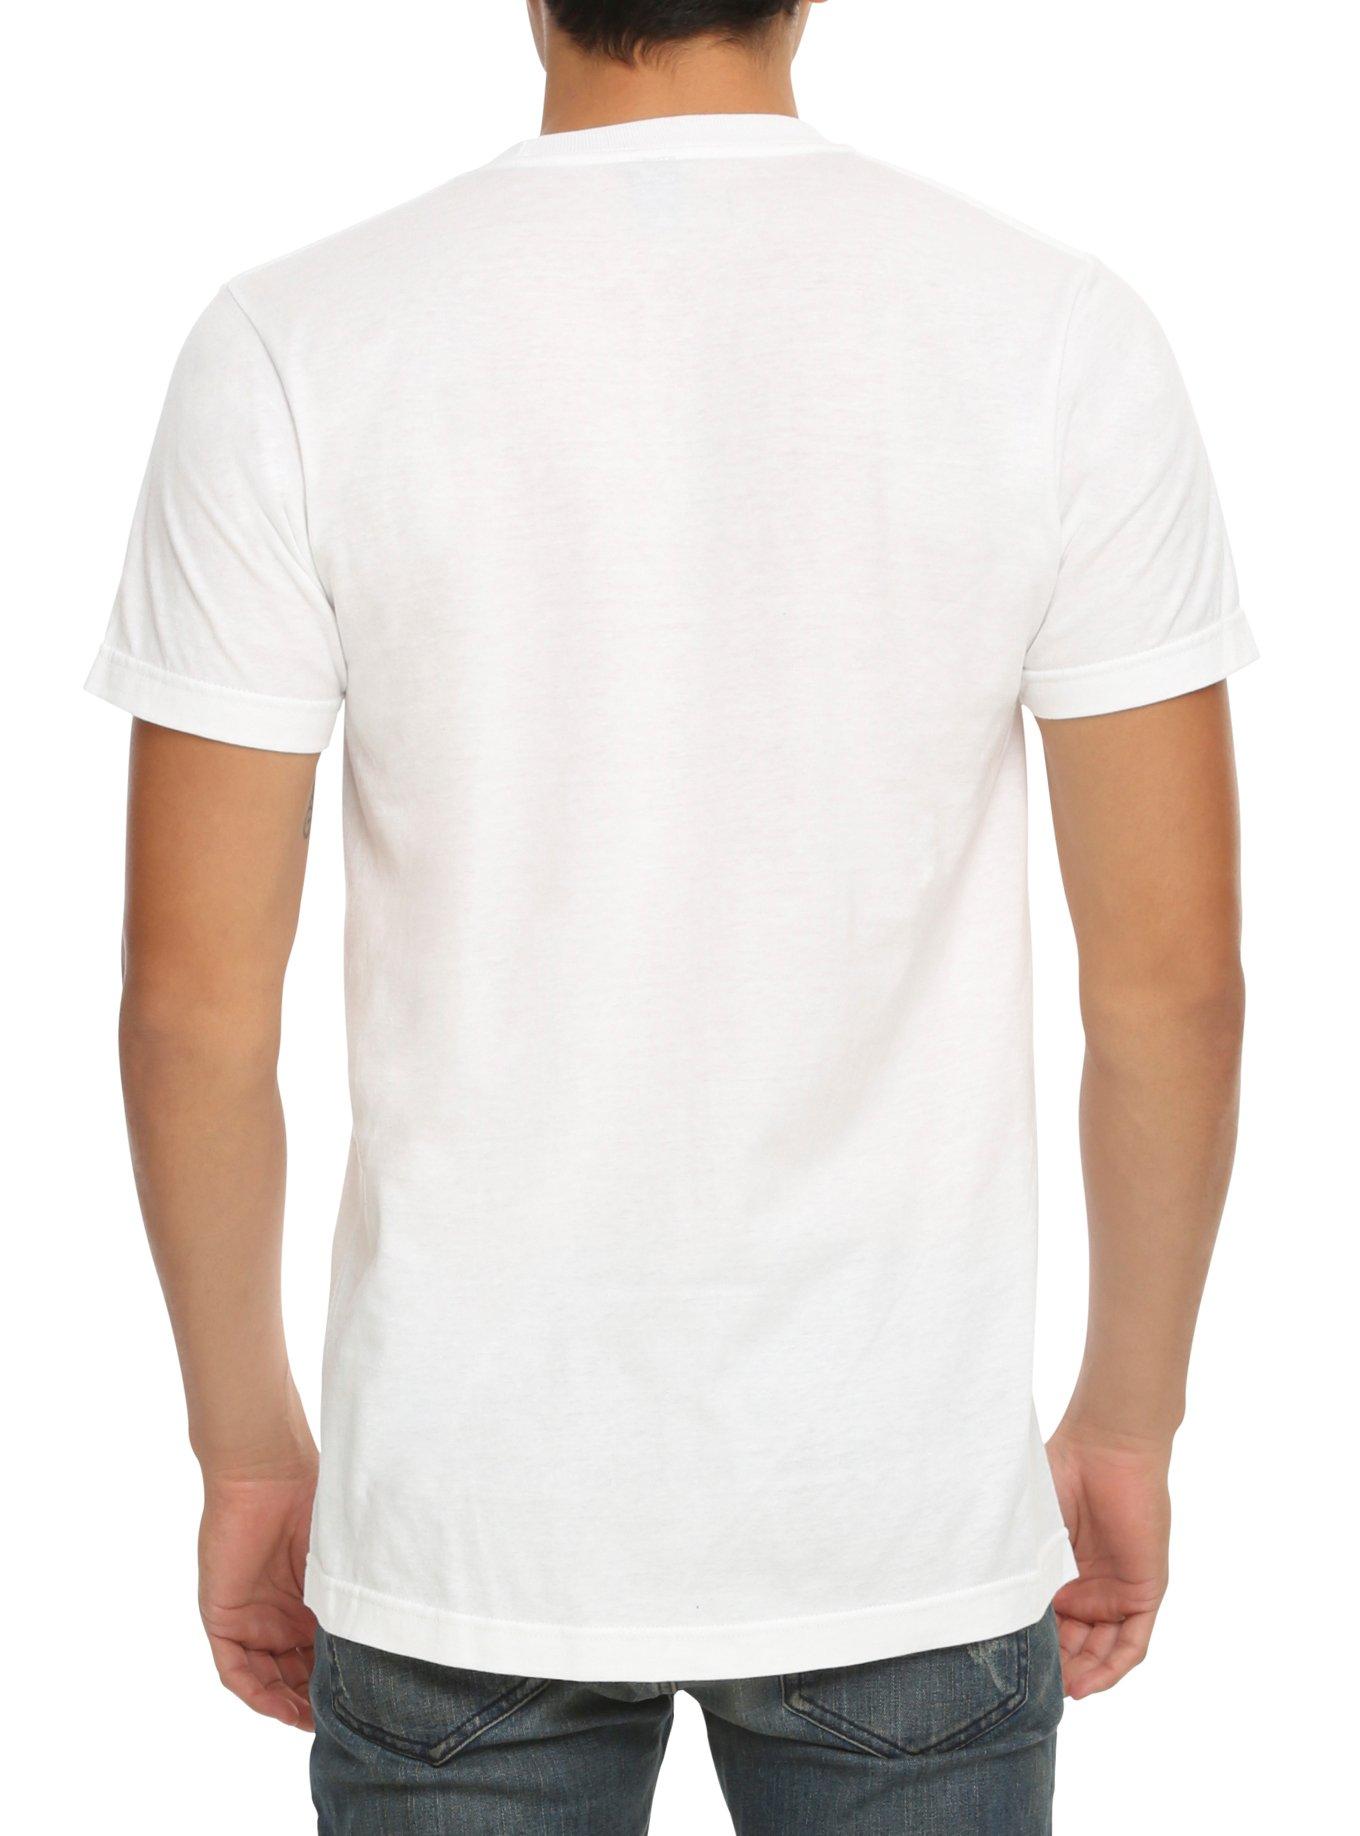 Attila Worldwide Villains T-Shirt, WHITE, alternate